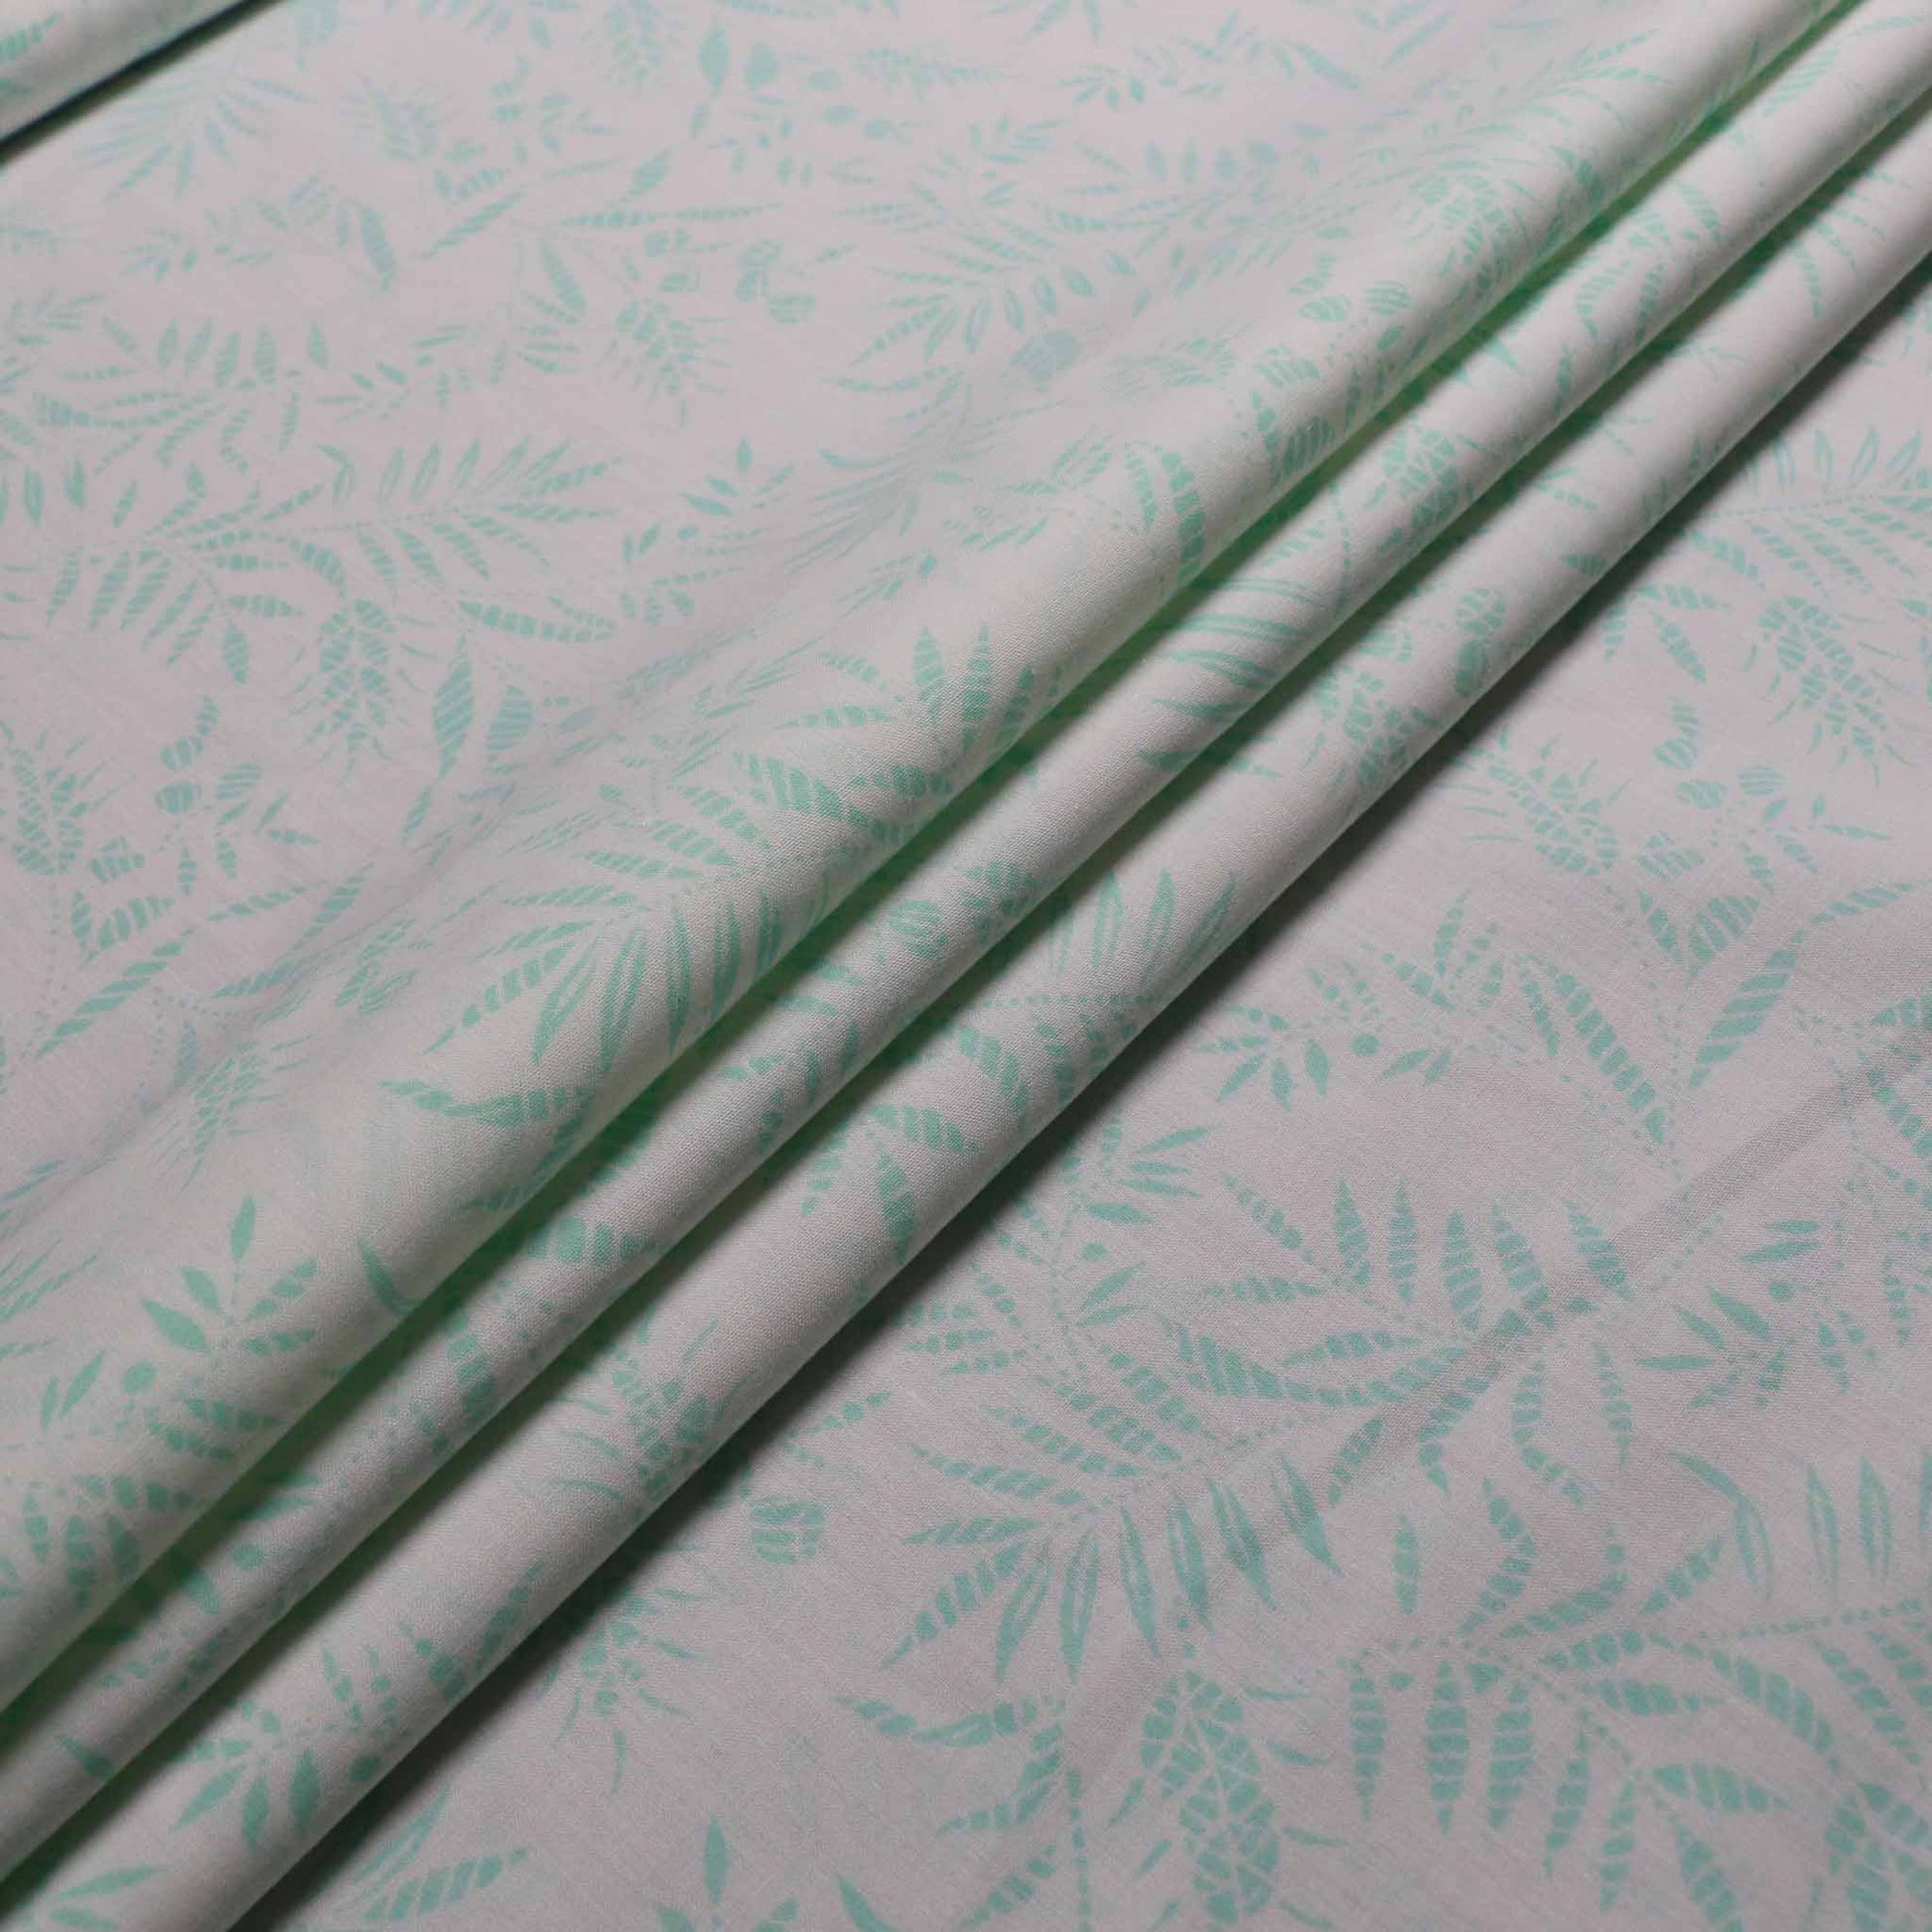 mint leaves printed on white cotton poplin dressmaking fabric